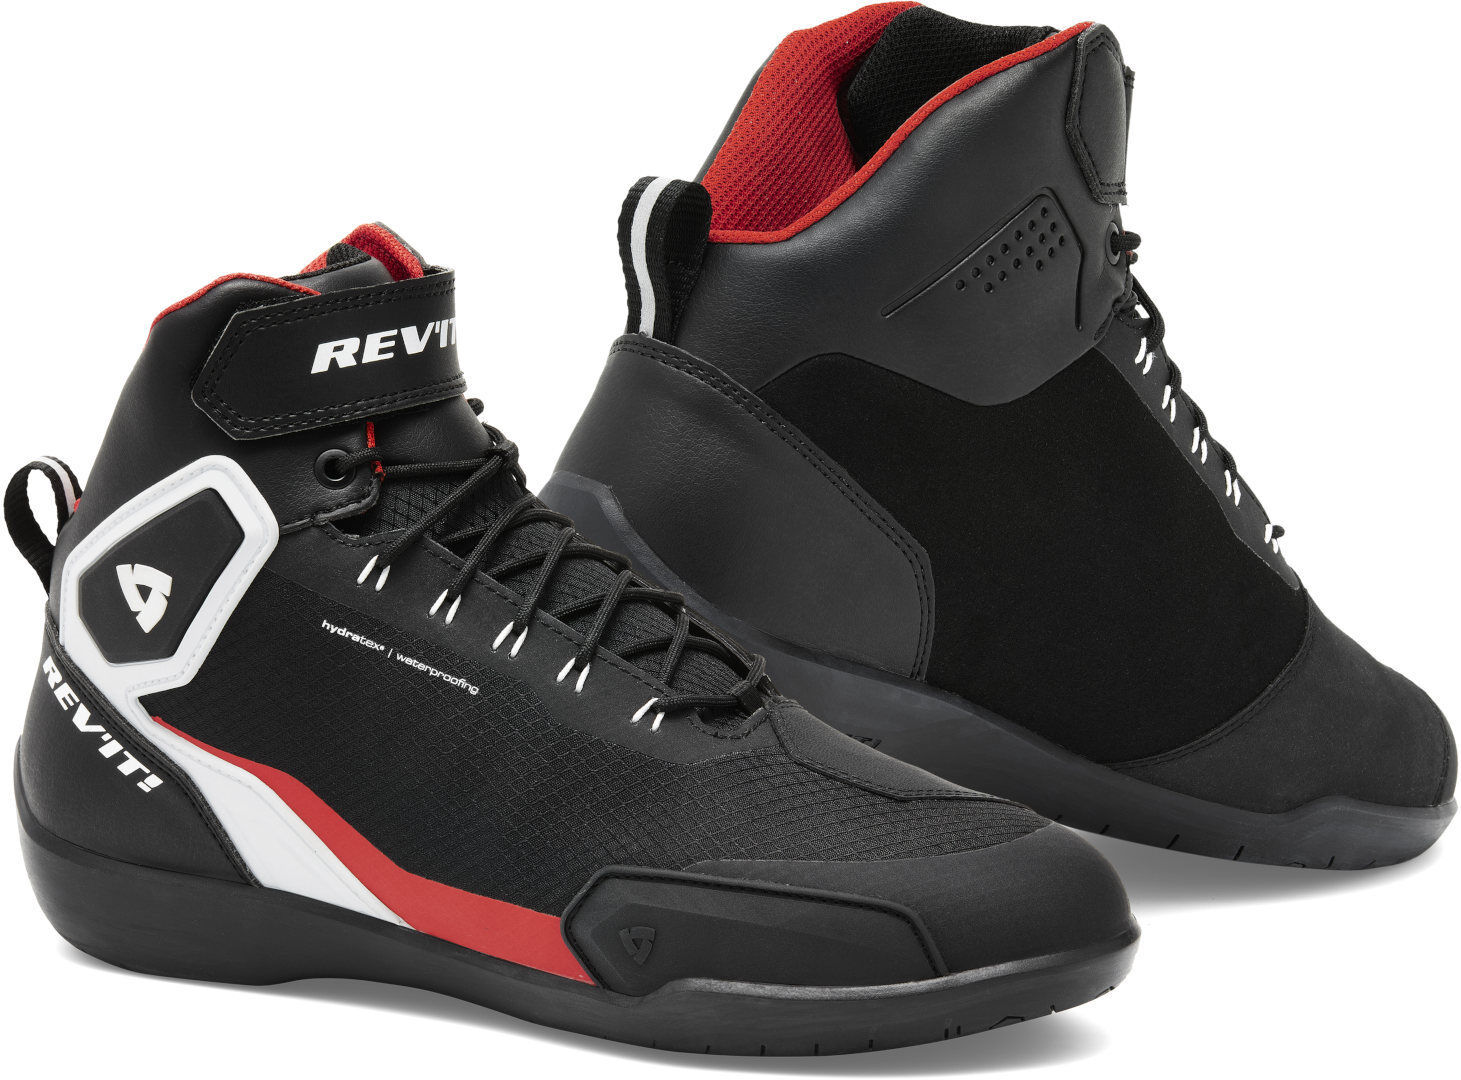 Revit G-Force H2O Zapatos impermeables para motocicletas - Negro Blanco Rojo (46)